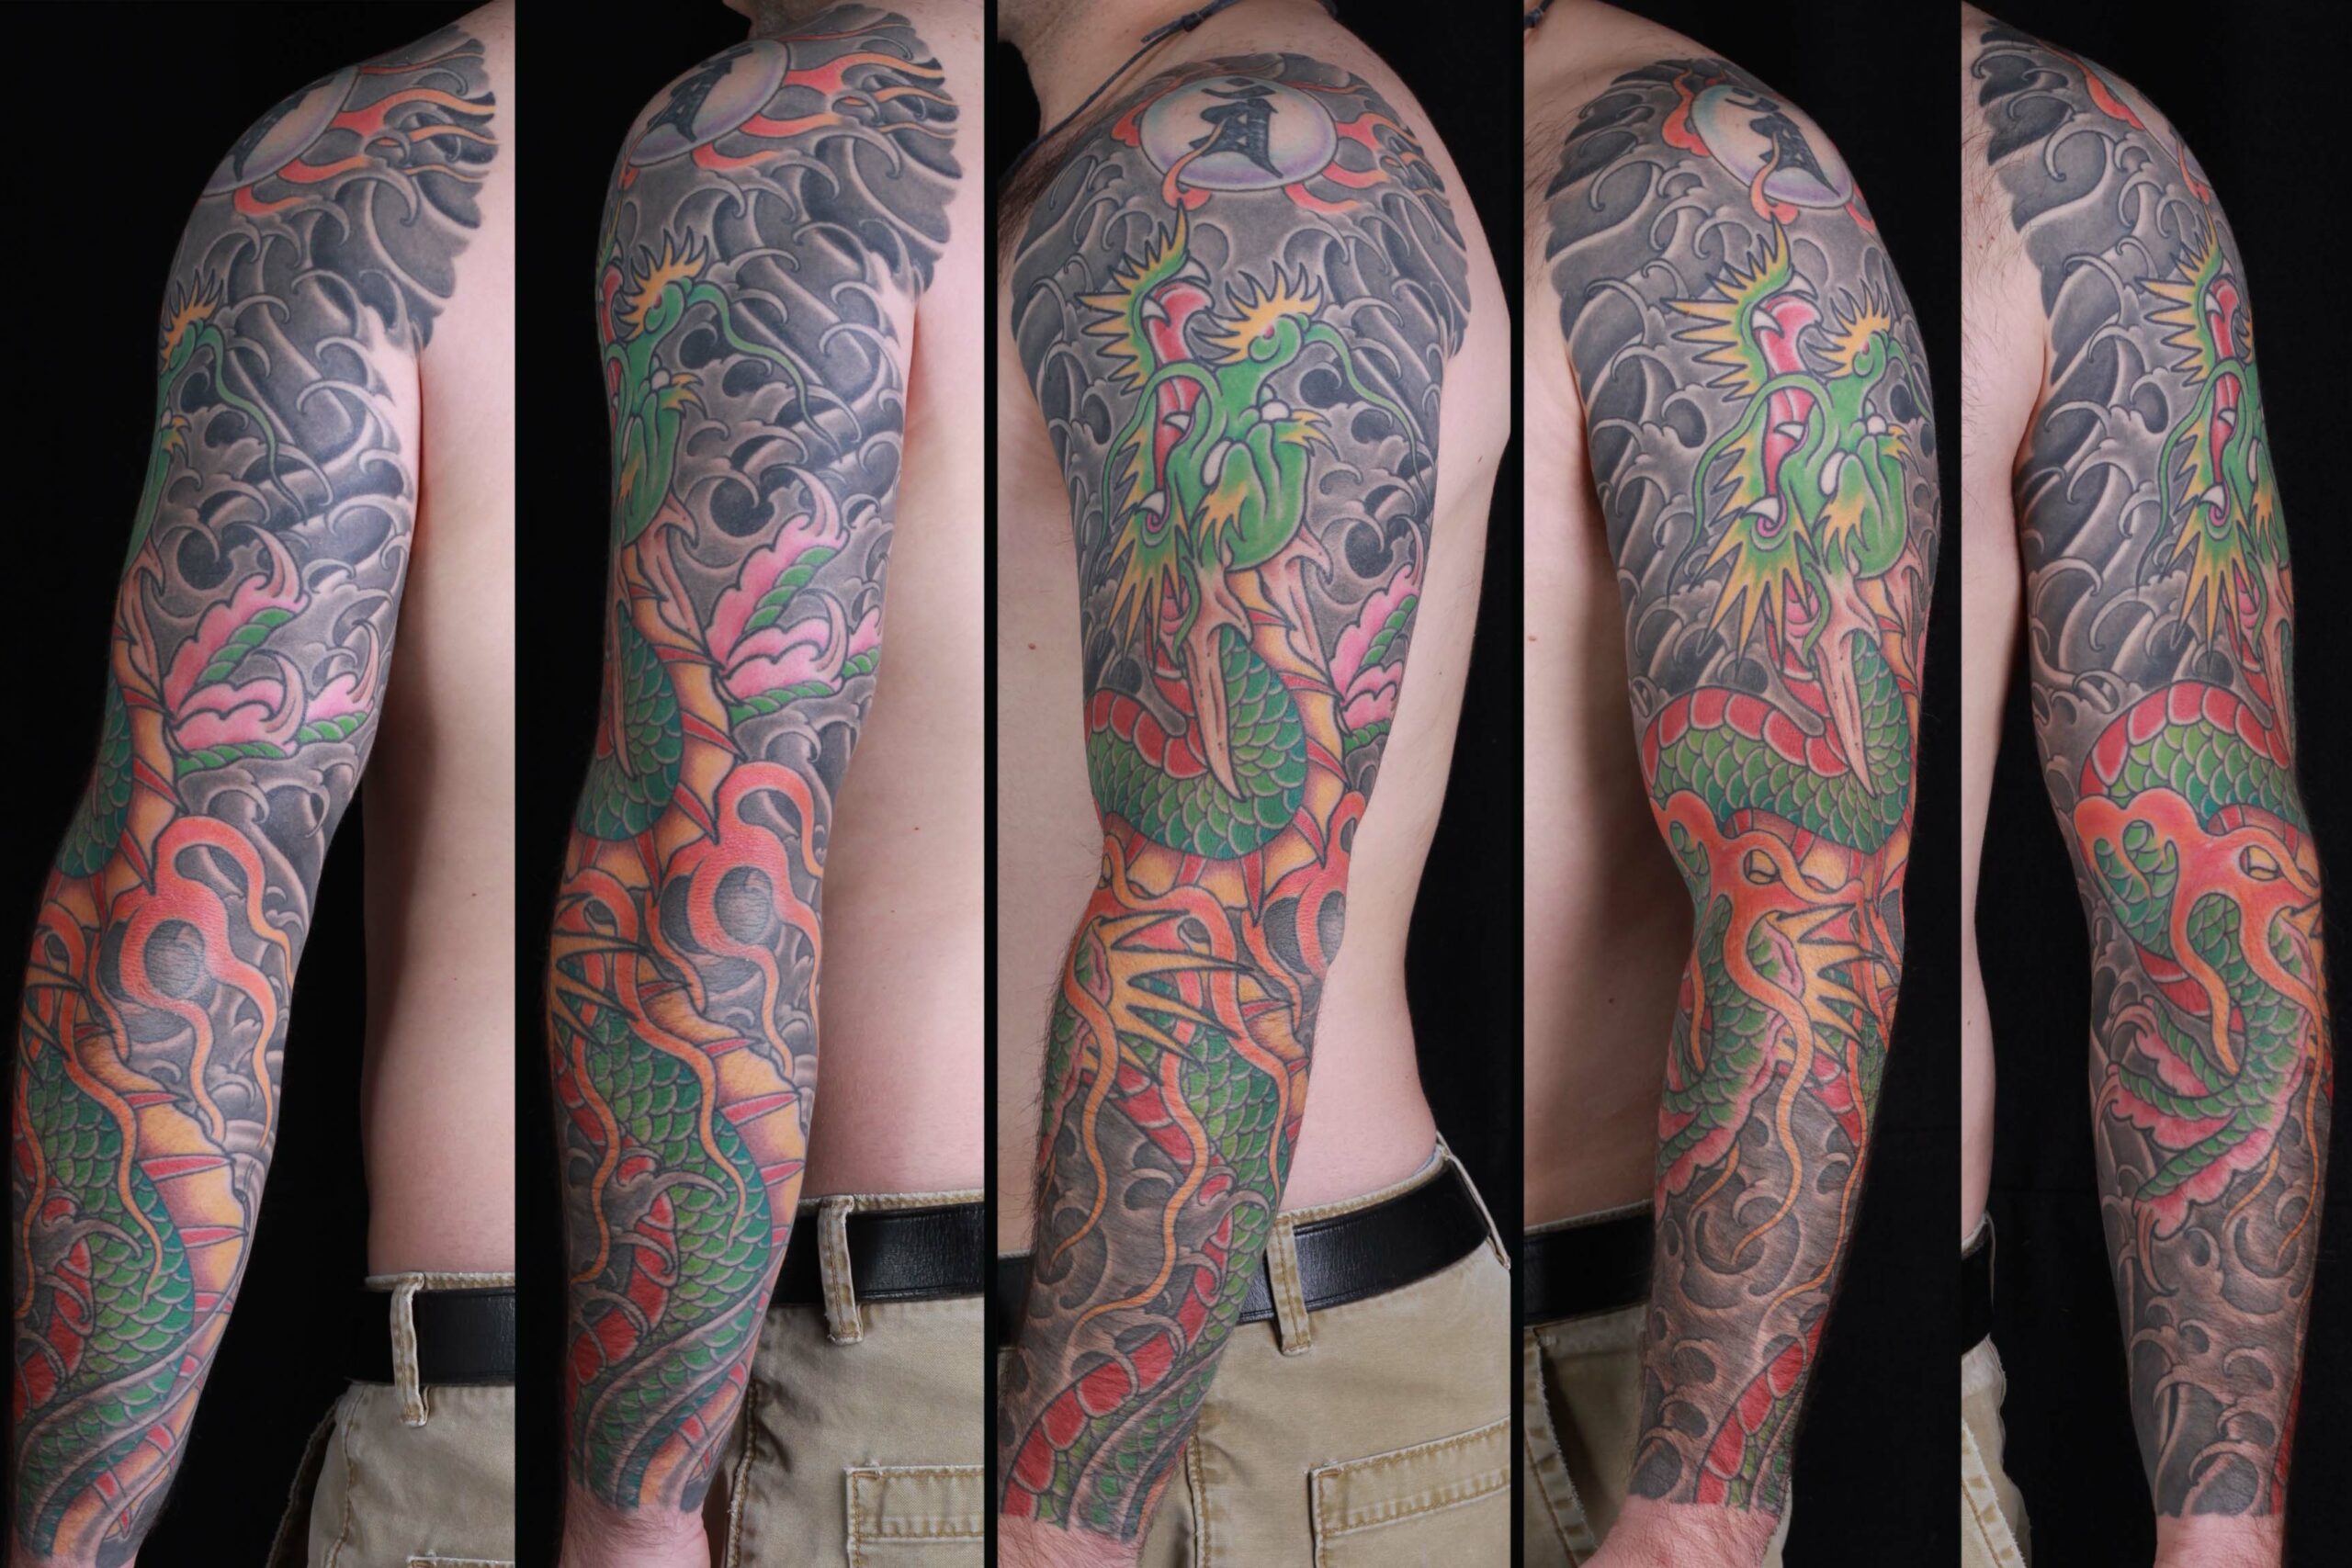 brian-thurow-dedication-tattoo-japanese-dragon-flames-water-waves-sleeve-arm